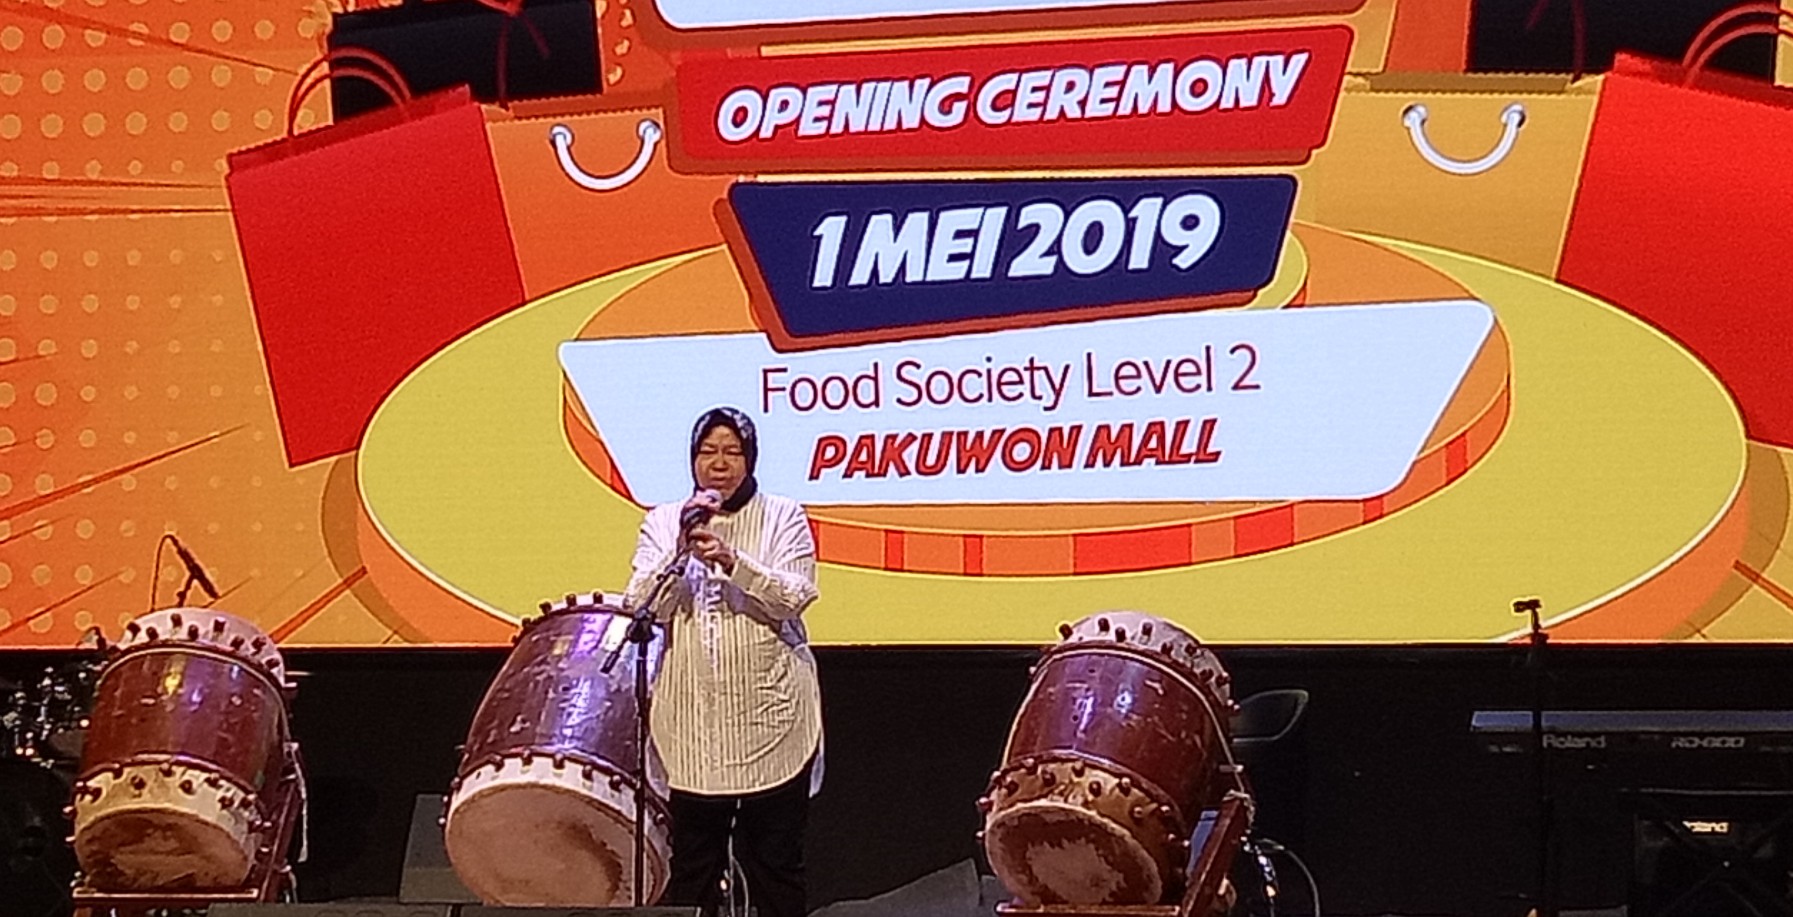 Walikota Surabaya,Tri Rismaharini saat menyampaikan sambutan di acara pembukaan Surabaya Shoping Festival di Pakuwon Mall Level 2 Surabaya. Rabu, 1 Mei 2019. (Foto: Pita/ ngopibareng. Id)  